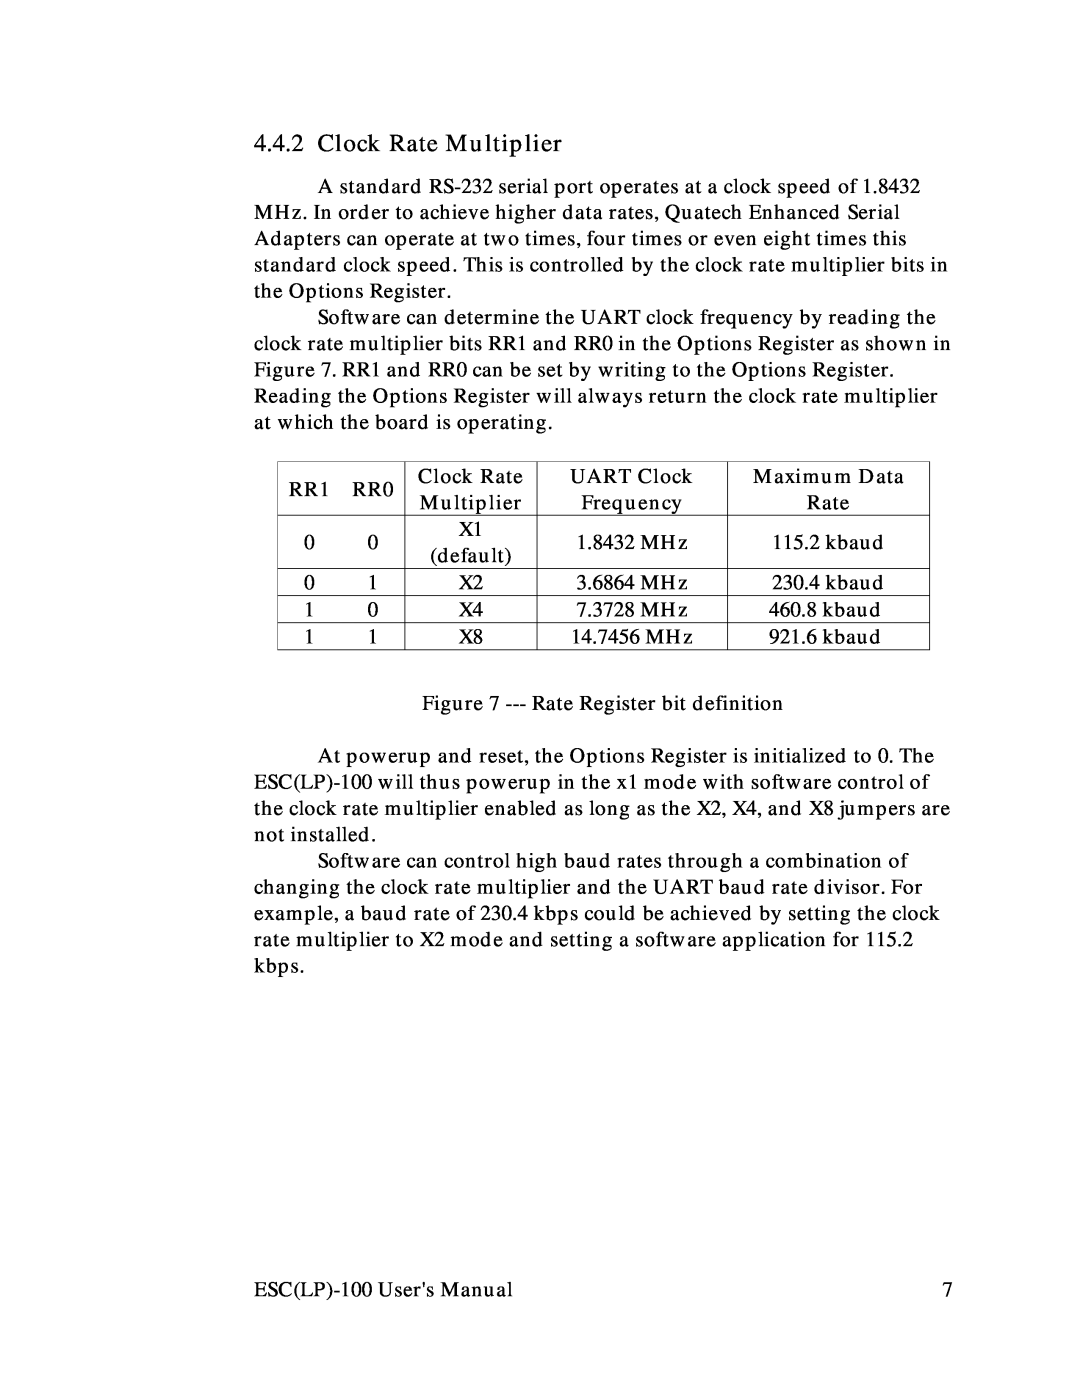 Quatech RS-232 user manual Clock Rate Multiplier, UART Clock, Maximum Data, Frequency 